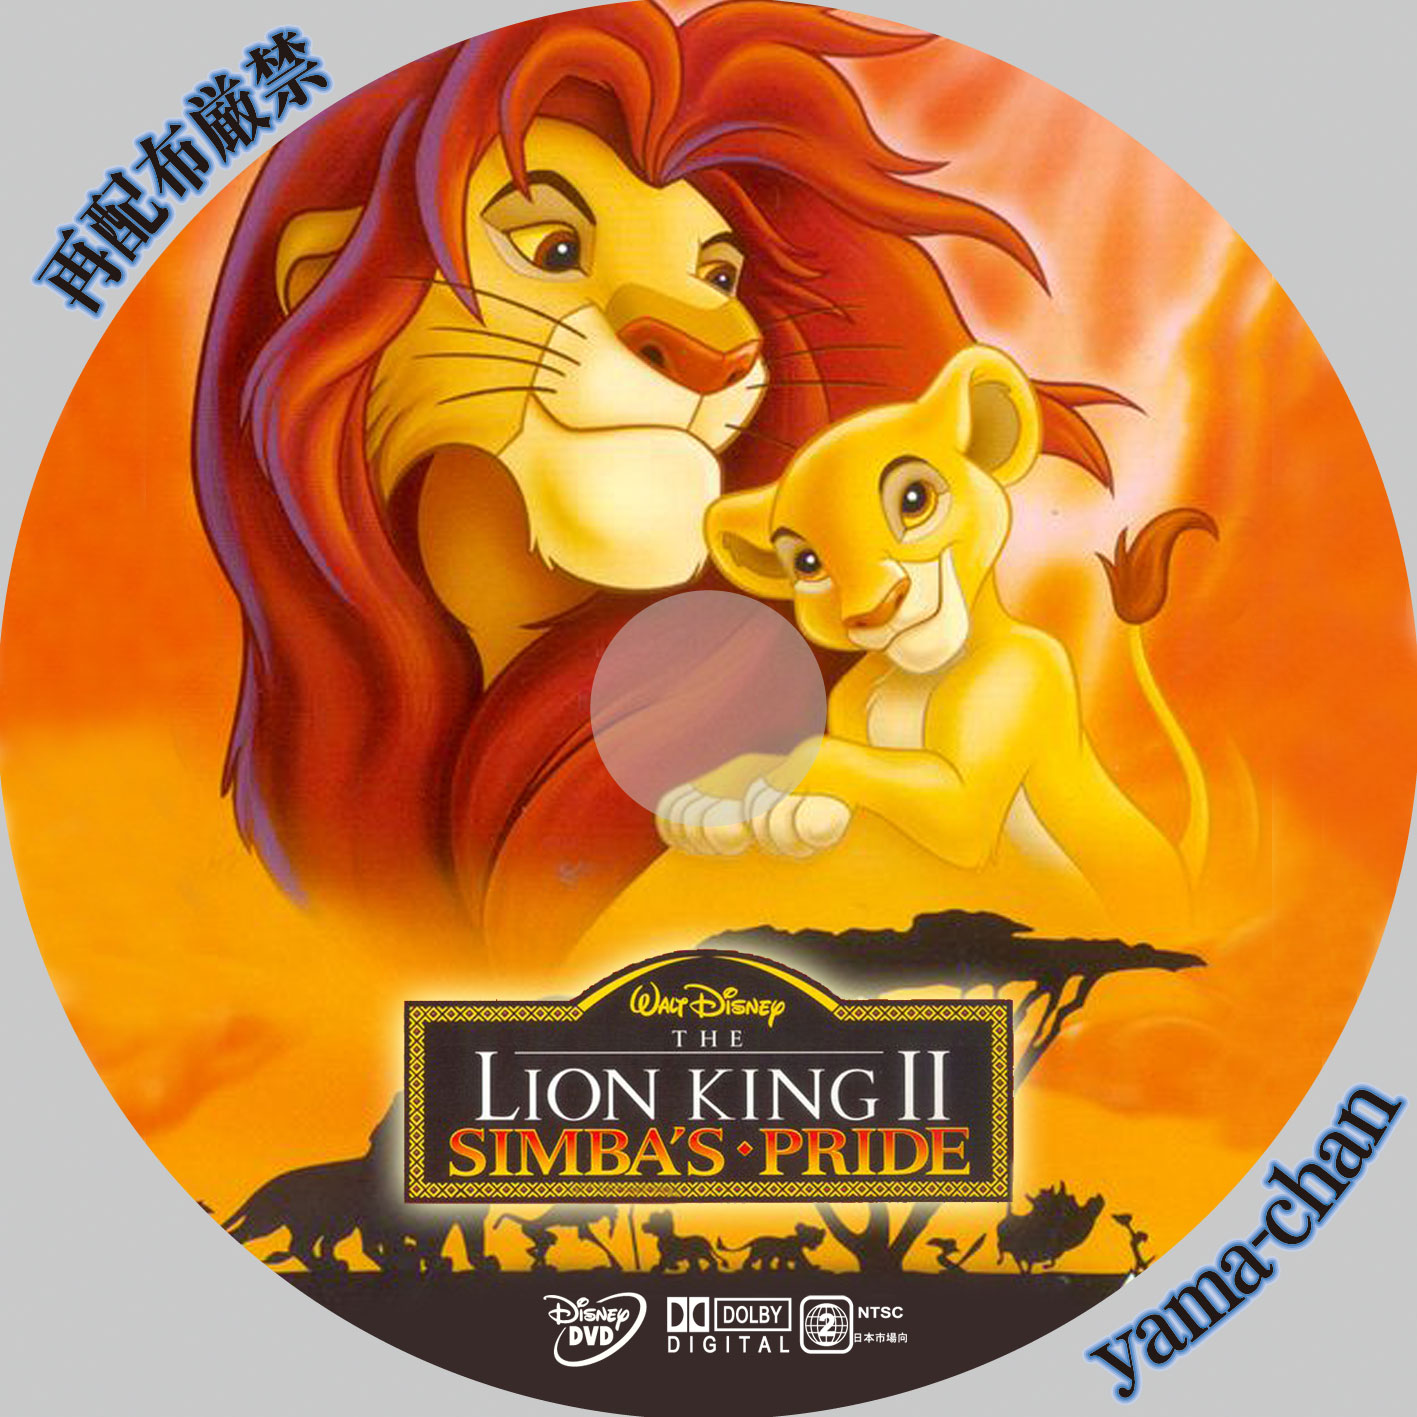 The Lion King 1 1/2 and 2 Simbas Pride blu ray - YouTube